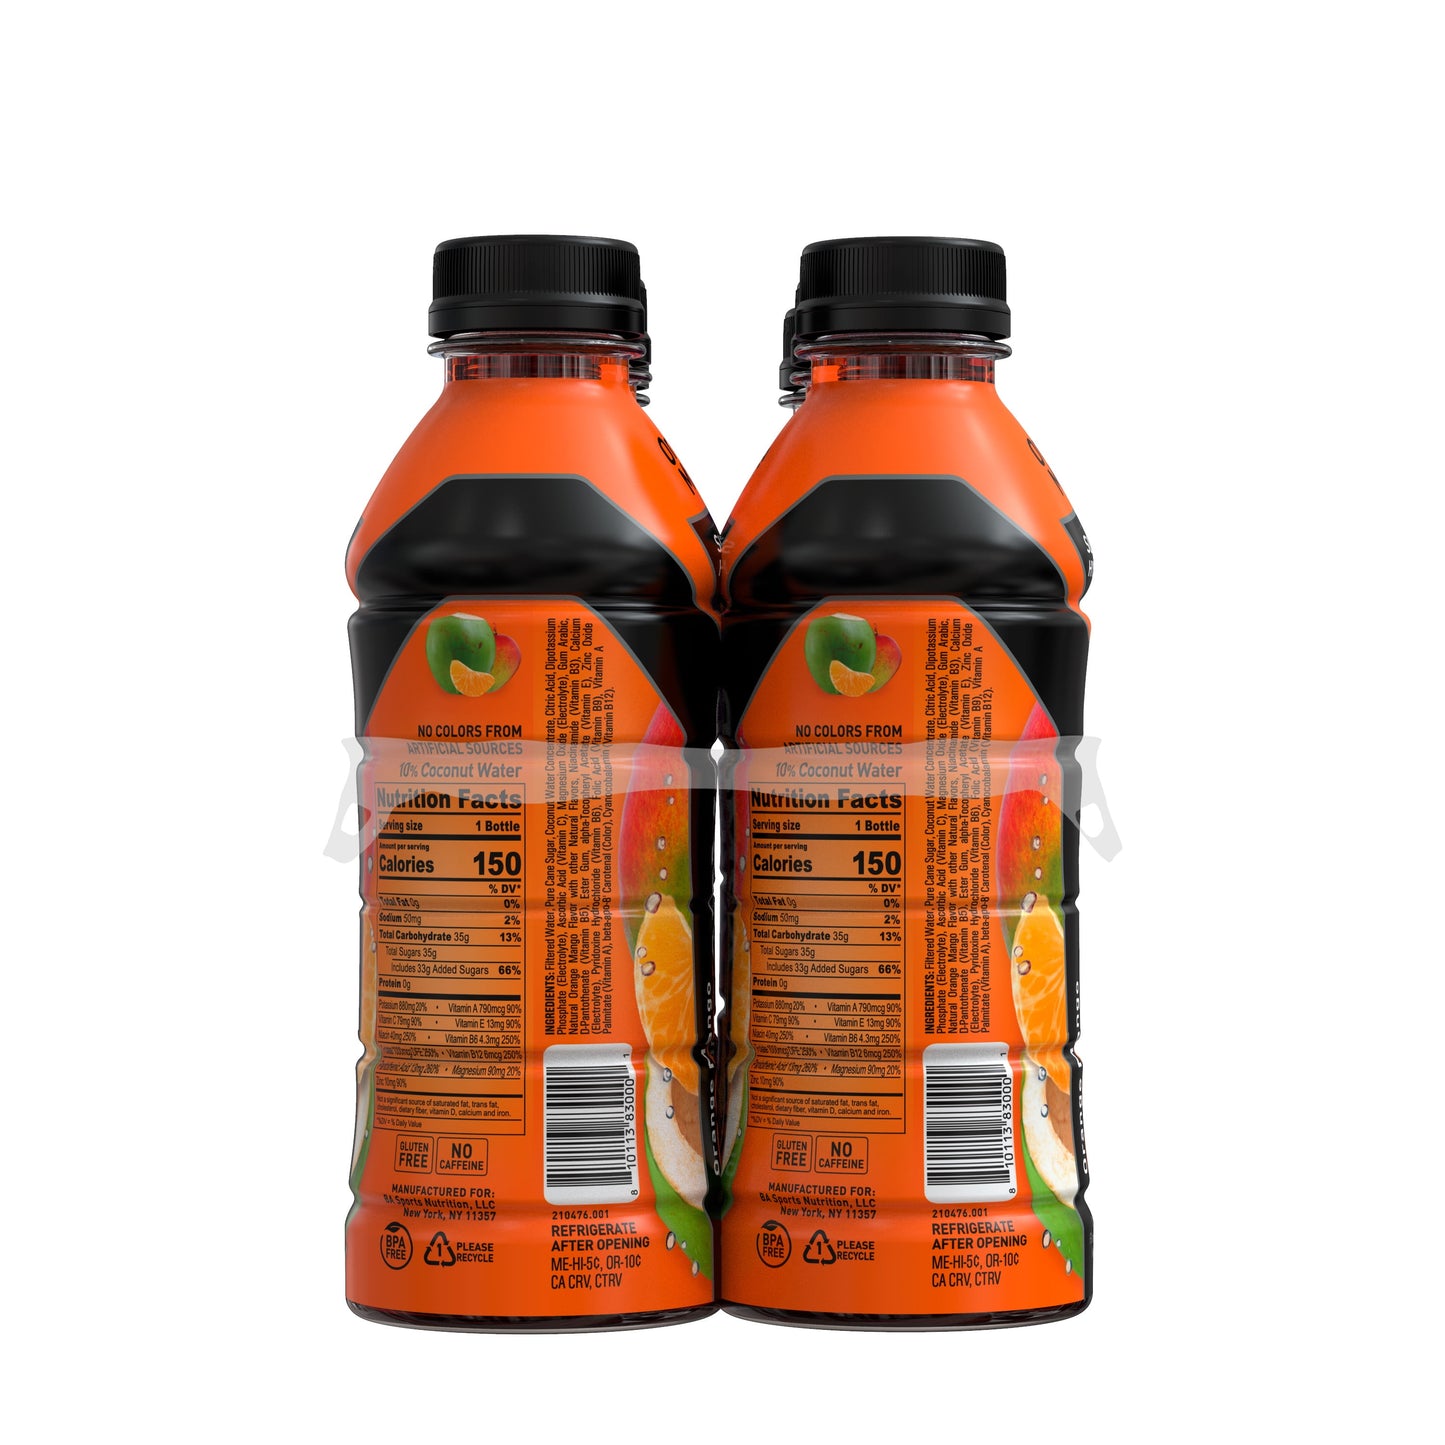 BODYARMOR Sports Drink Orange Mango, 20 fl oz, 6 Pack